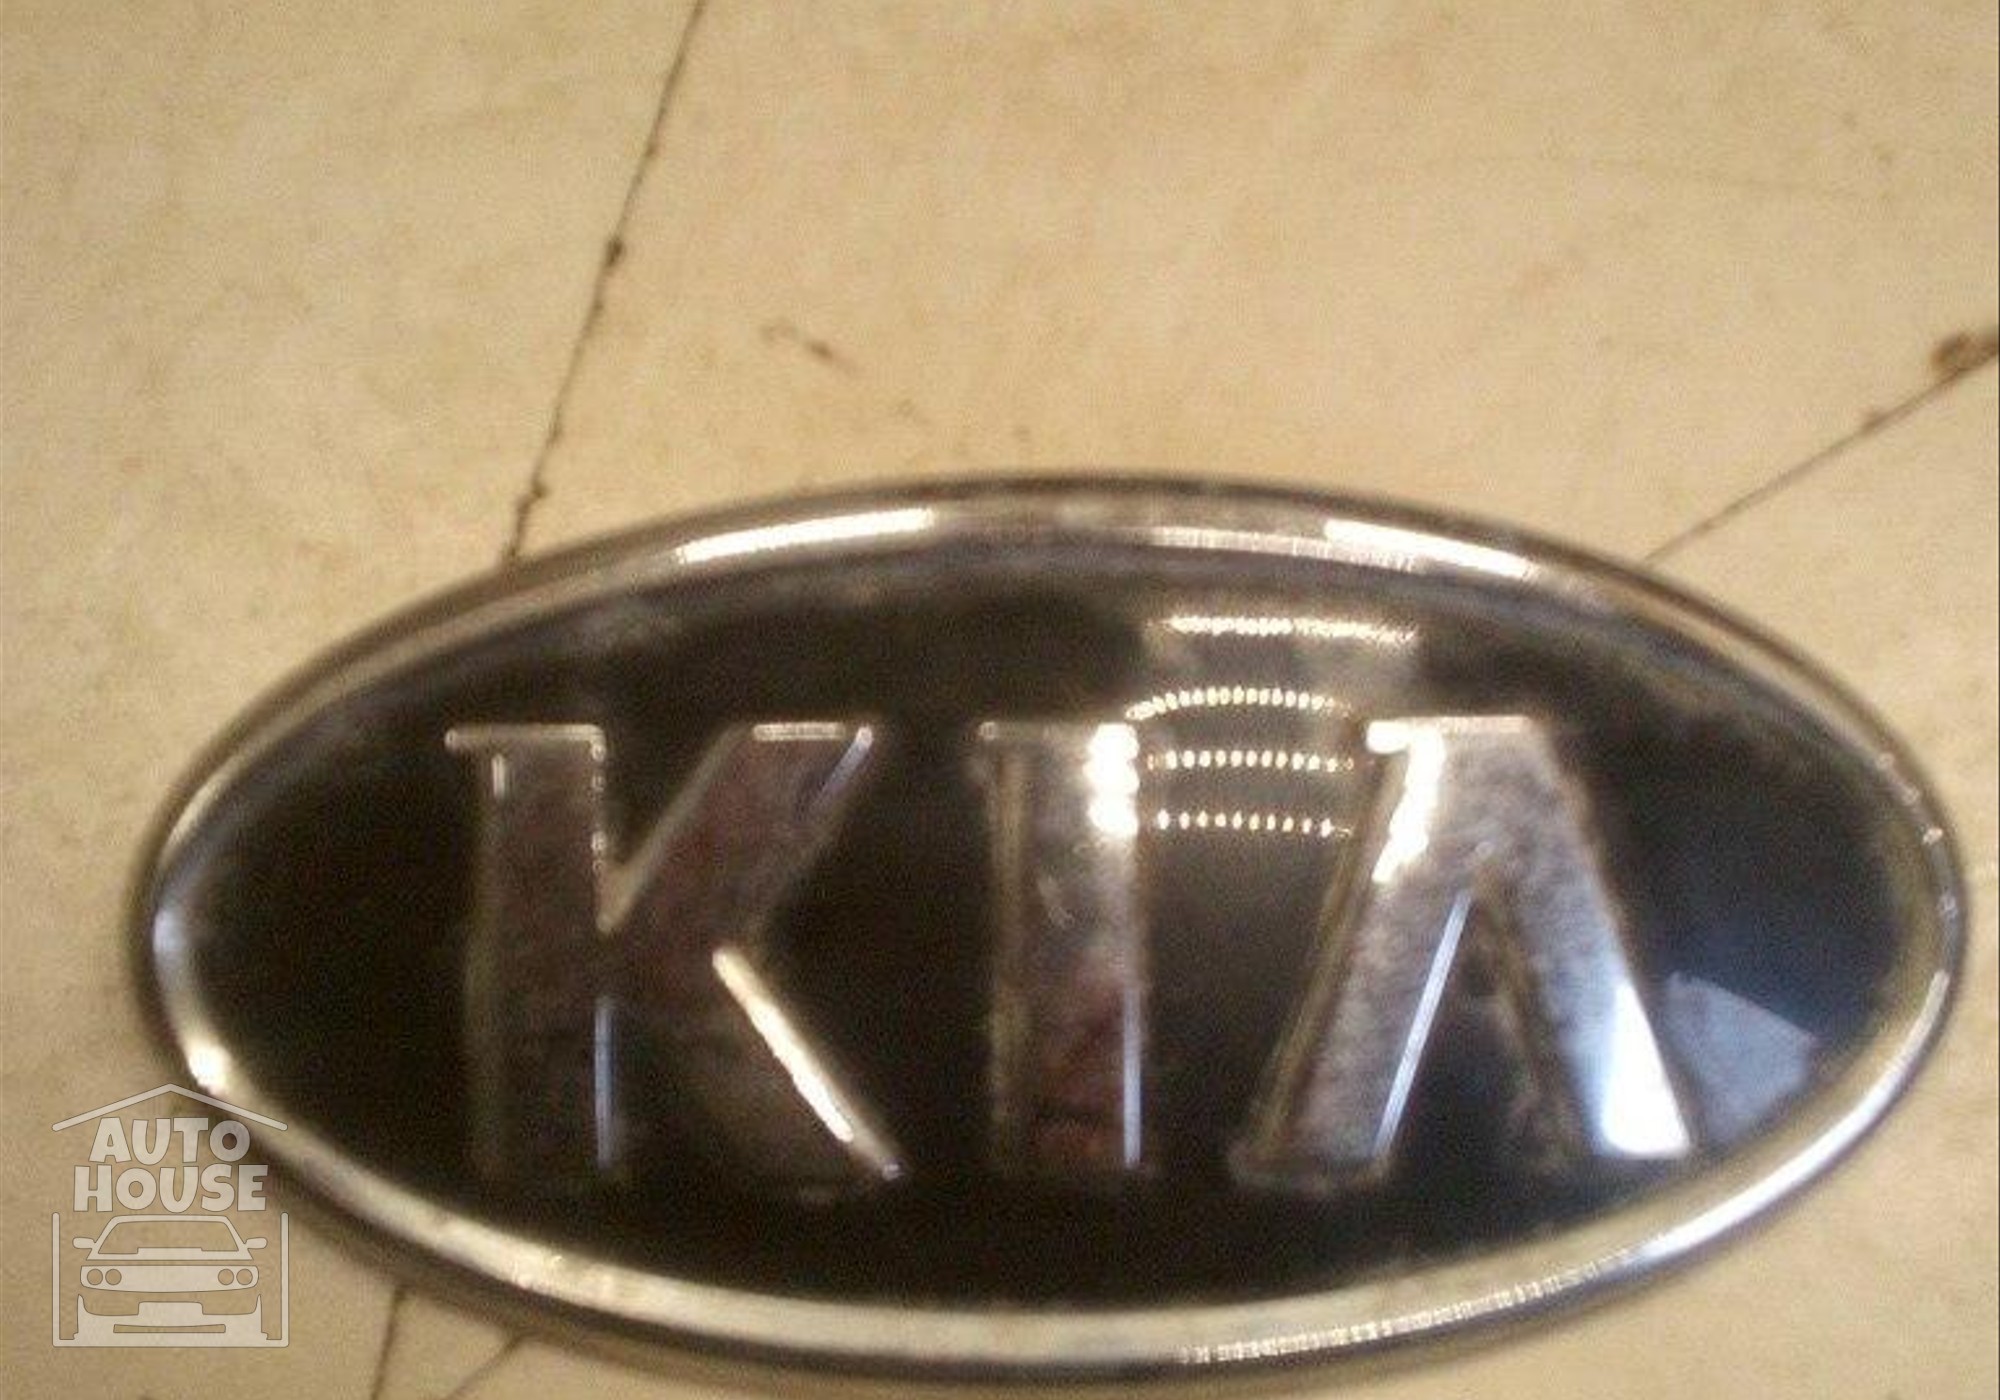 863104X000 Эмблема на крышку багажника для Kia Rio III (с 2011 по 2017)